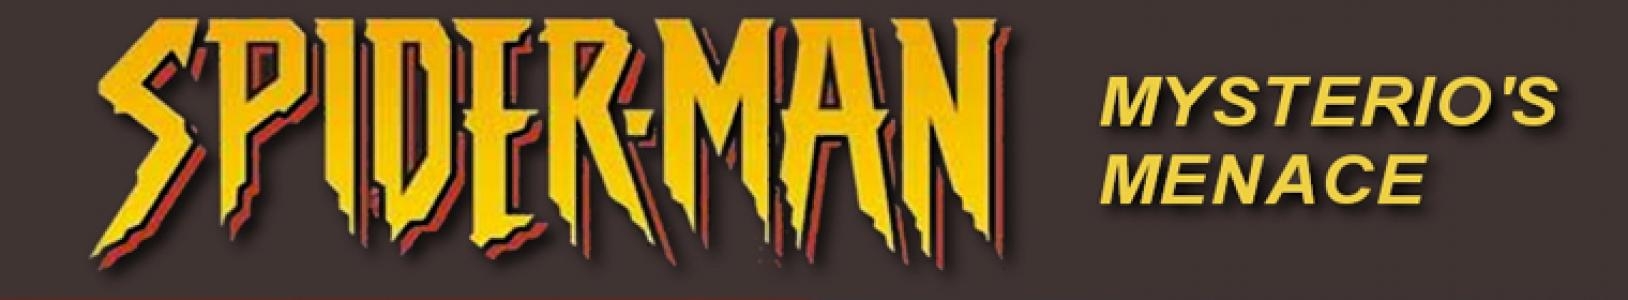 Spider-Man: Mysterio's Menace banner